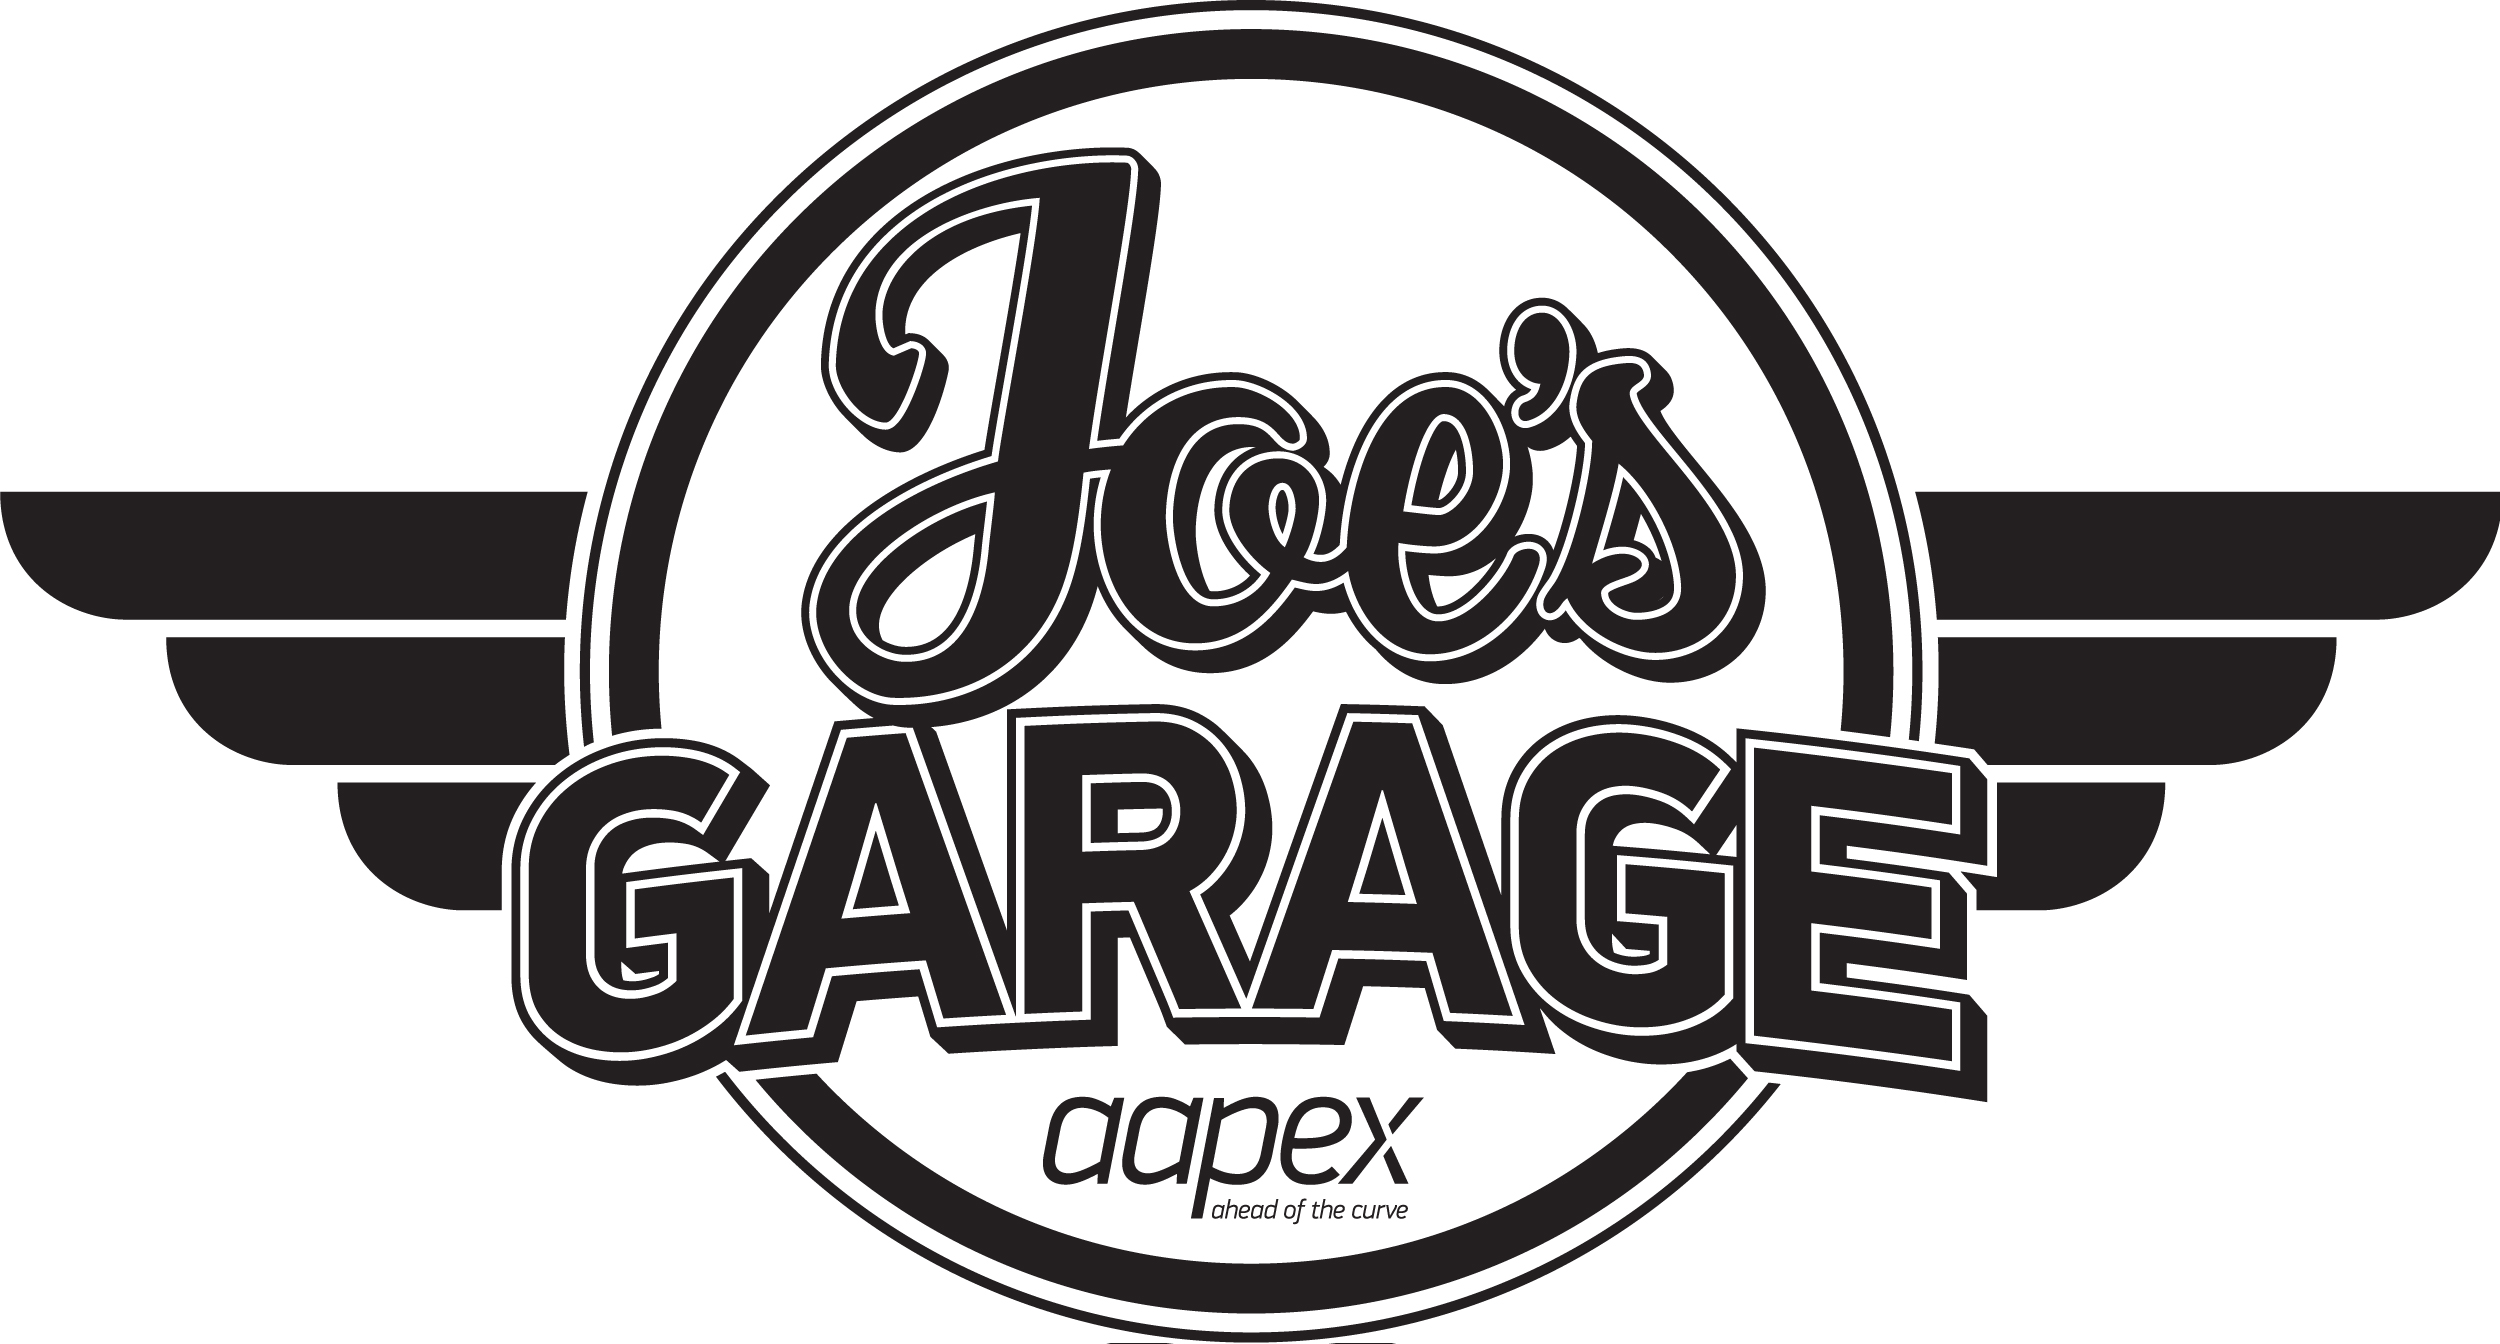 AAPEX20-0140_LG_JoesGarage-Black LOGO